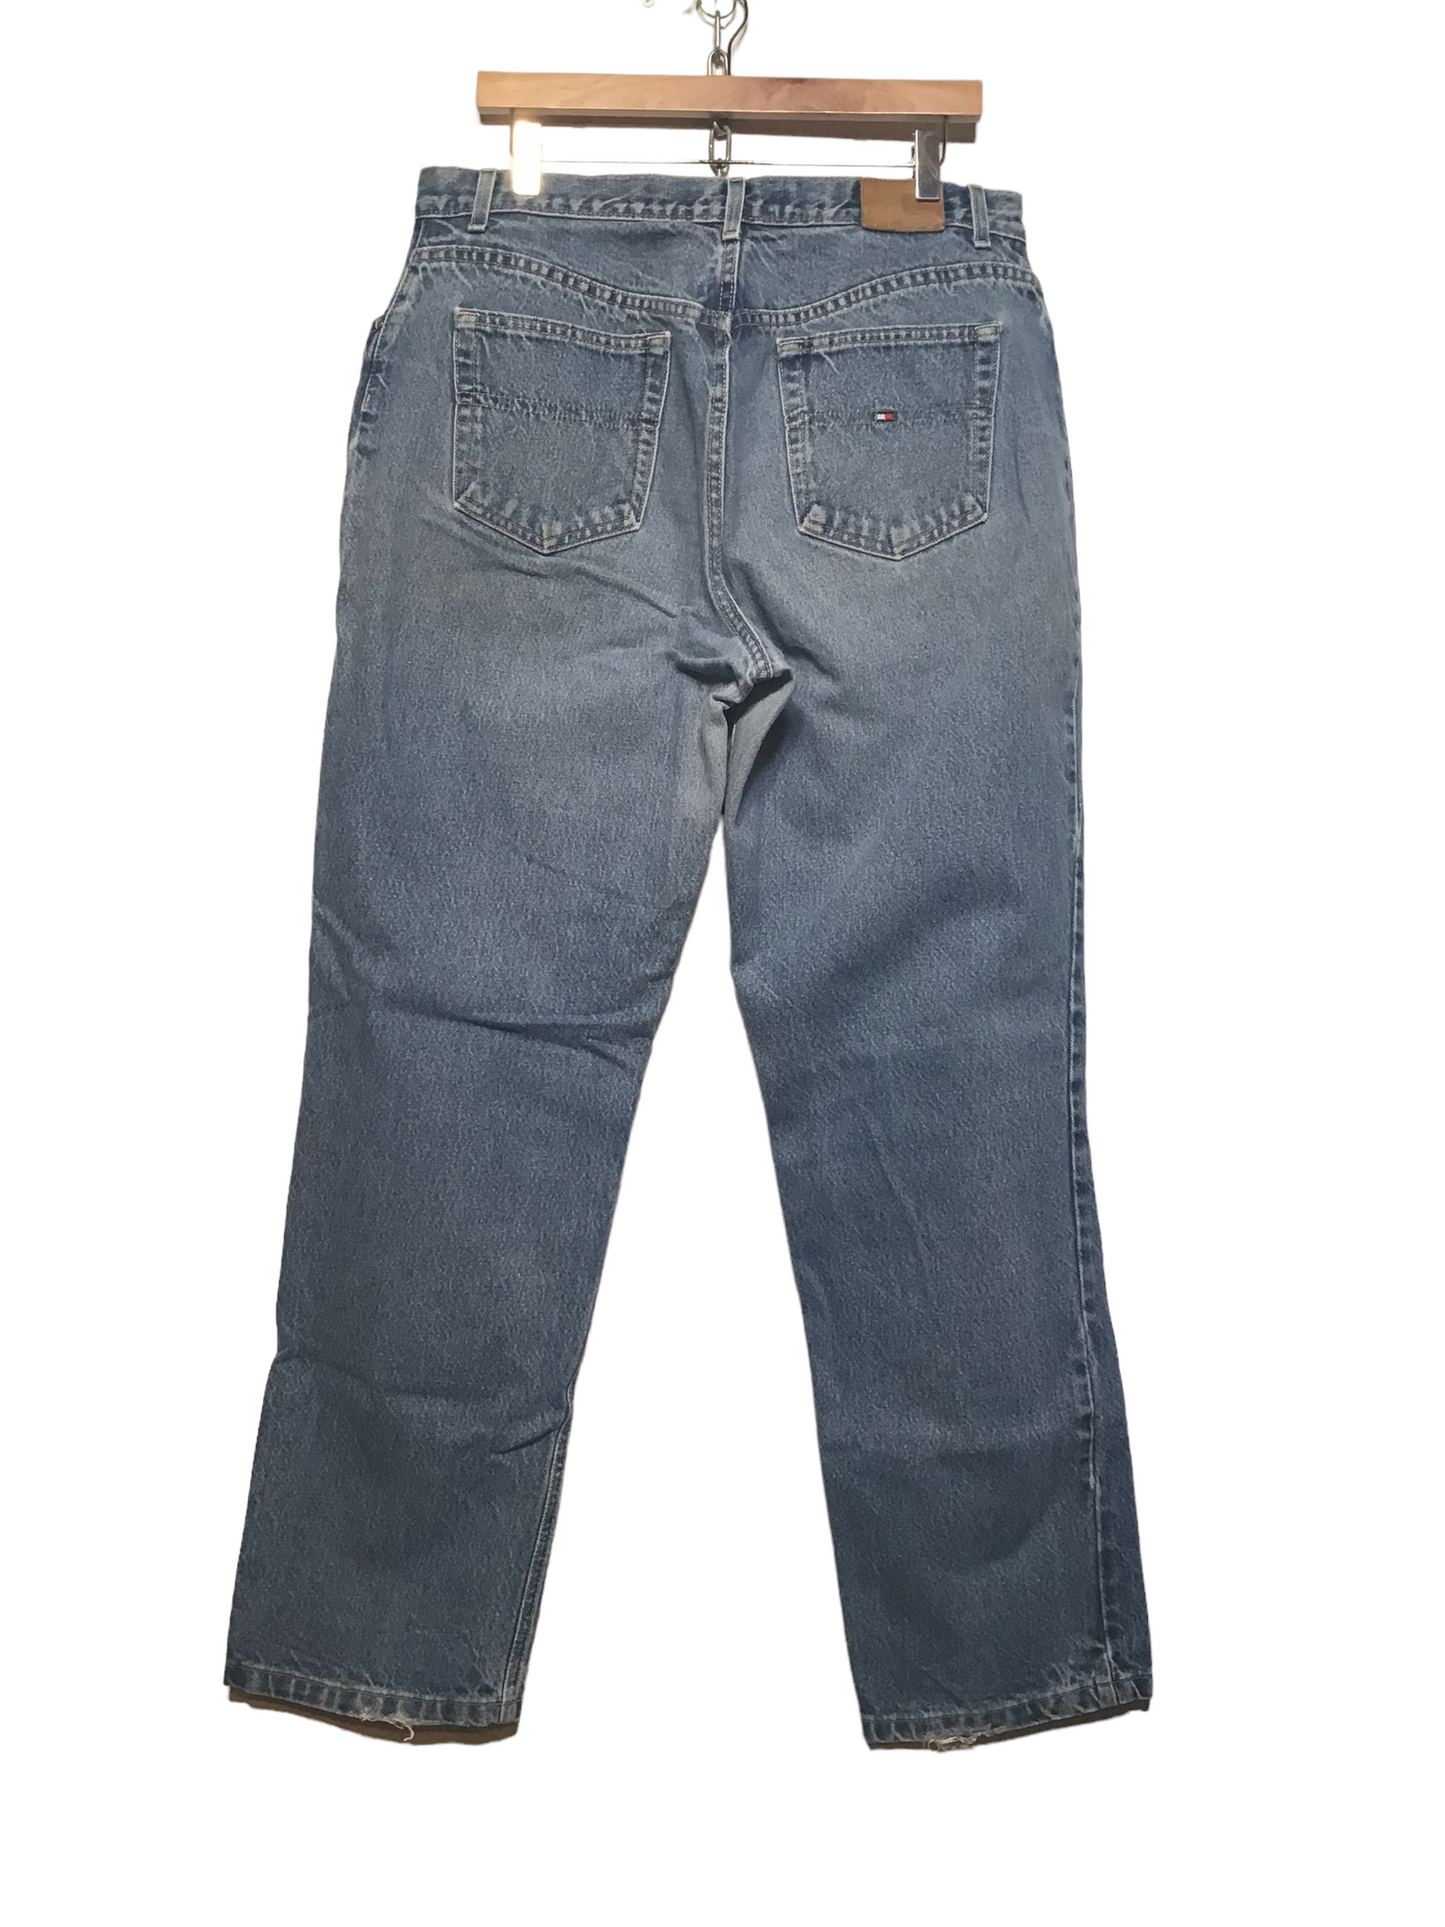 Tommy Hilfiger Jeans (34X31)